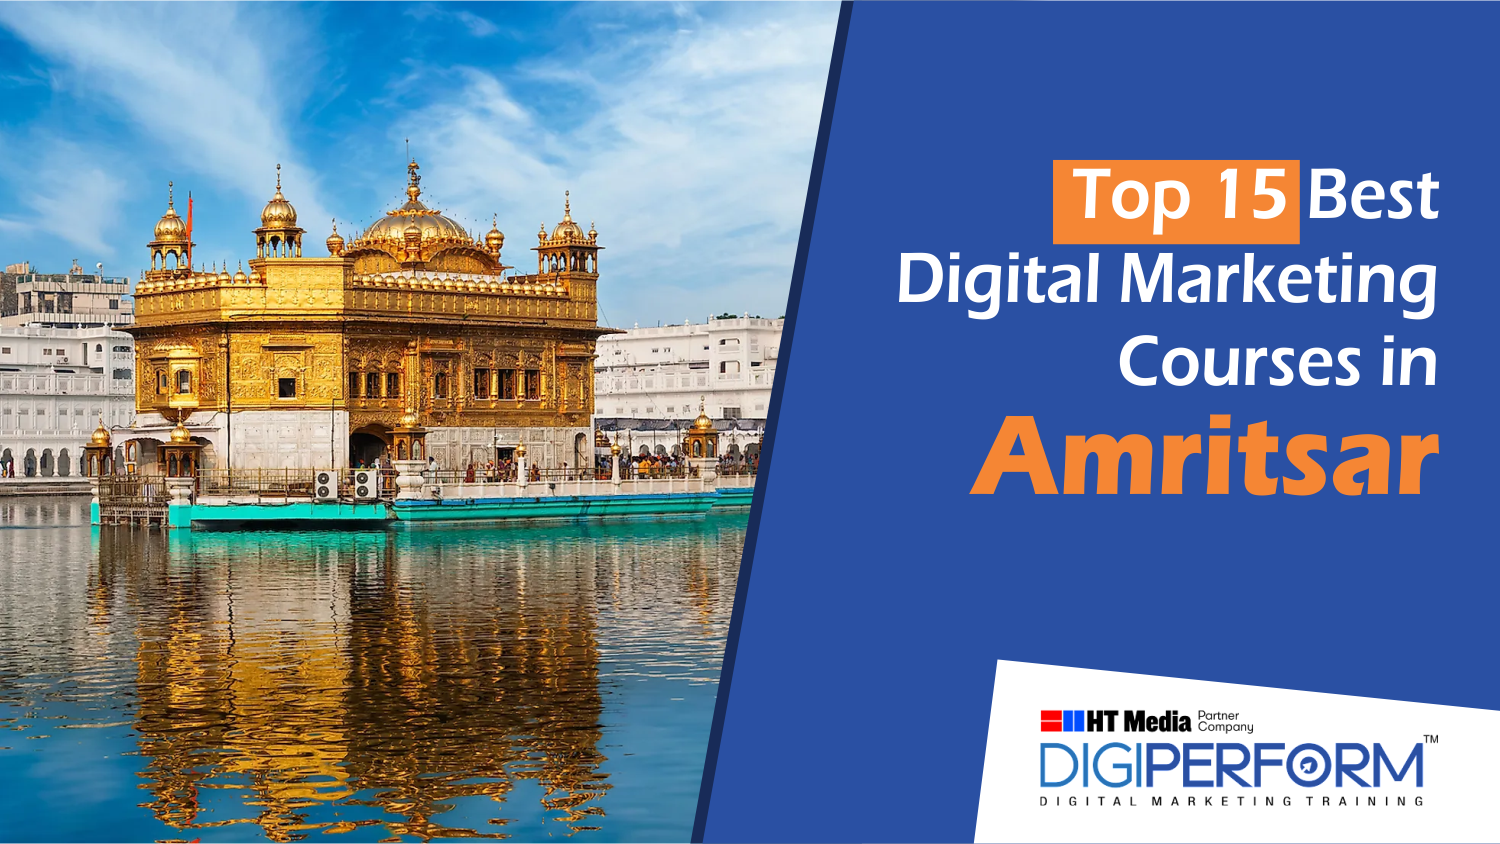 Top 15 Best Digital Marketing Courses in Amritsar